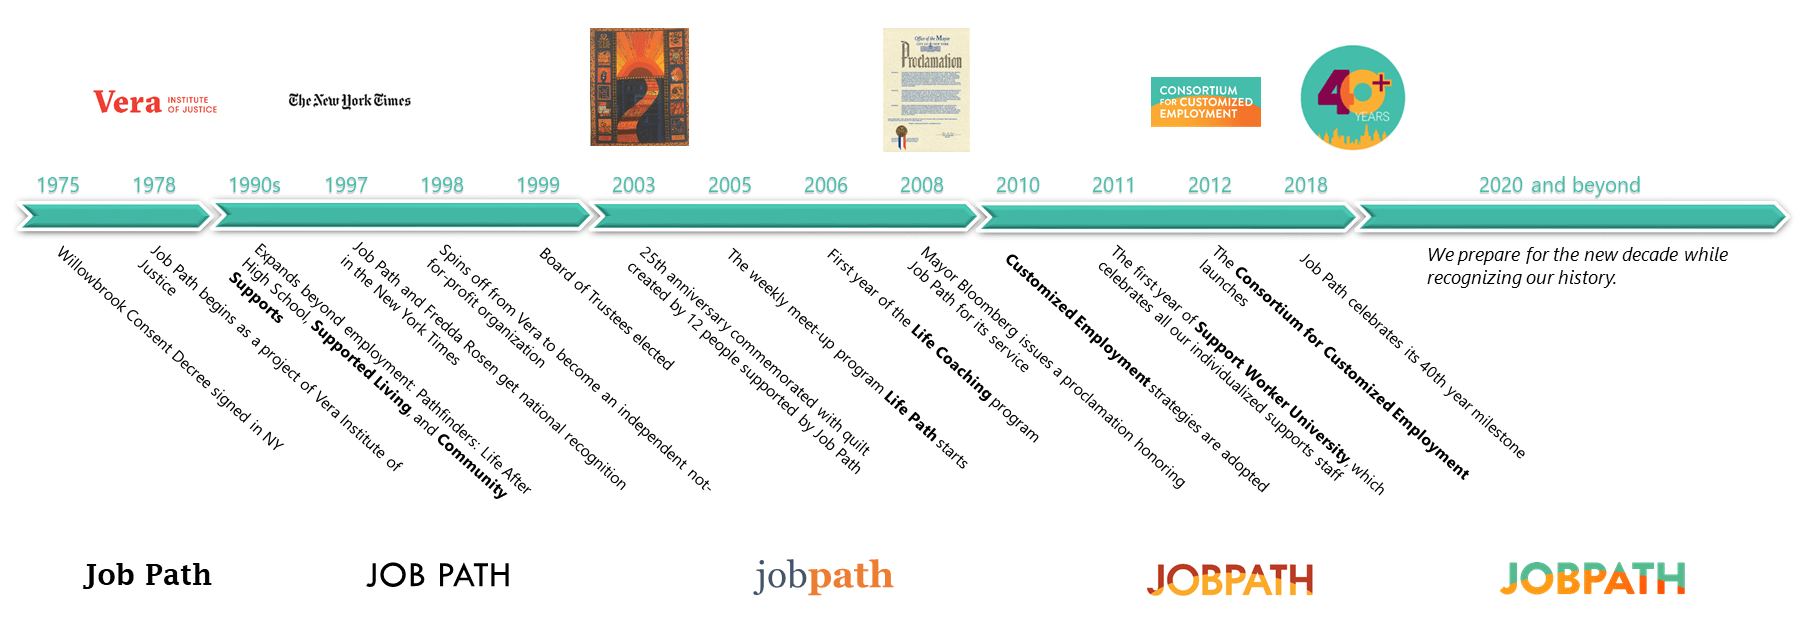 Job Path timeline